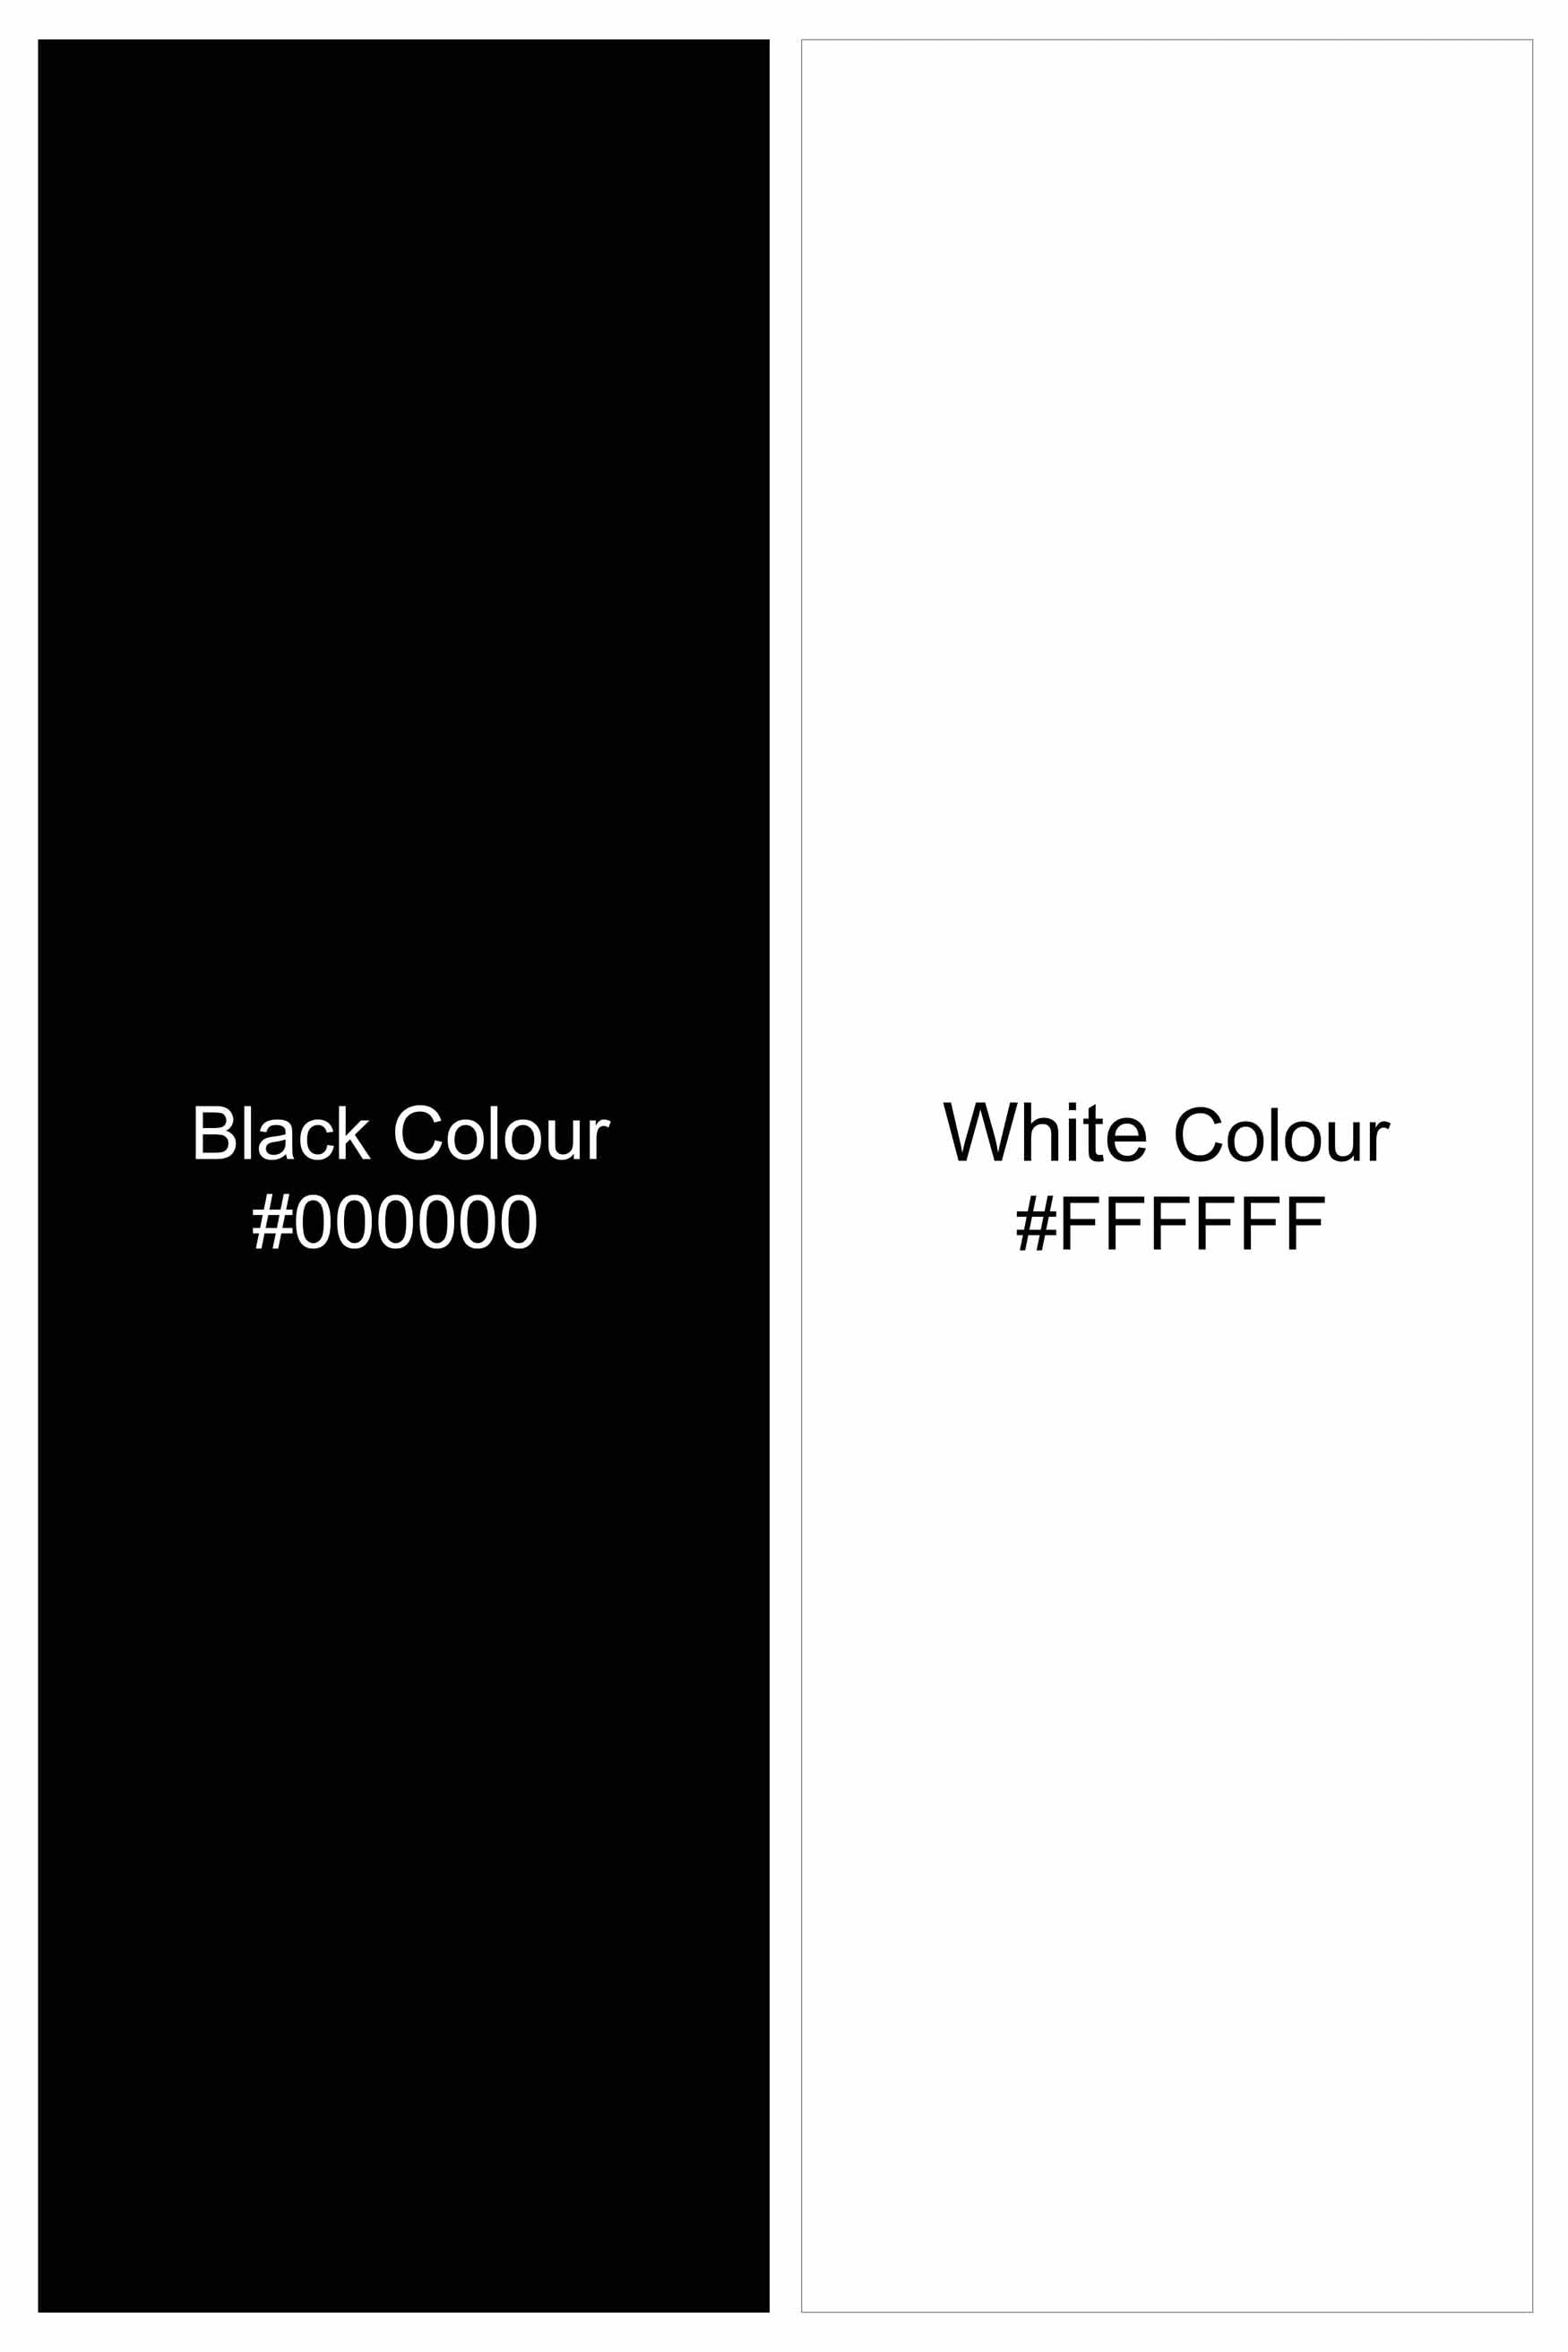 Jade Black and White Striped Hand Painted Twill Premium Cotton Designer Shirt 6464-CA-BLK-ART-38, 6464-CA-BLK-ART-H-38, 6464-CA-BLK-ART-39, 6464-CA-BLK-ART-H-39, 6464-CA-BLK-ART-40, 6464-CA-BLK-ART-H-40, 6464-CA-BLK-ART-42, 6464-CA-BLK-ART-H-42, 6464-CA-BLK-ART-44, 6464-CA-BLK-ART-H-44, 6464-CA-BLK-ART-46, 6464-CA-BLK-ART-H-46, 6464-CA-BLK-ART-48, 6464-CA-BLK-ART-H-48, 6464-CA-BLK-ART-50, 6464-CA-BLK-ART-H-50, 6464-CA-BLK-ART-52, 6464-CA-BLK-ART-H-52